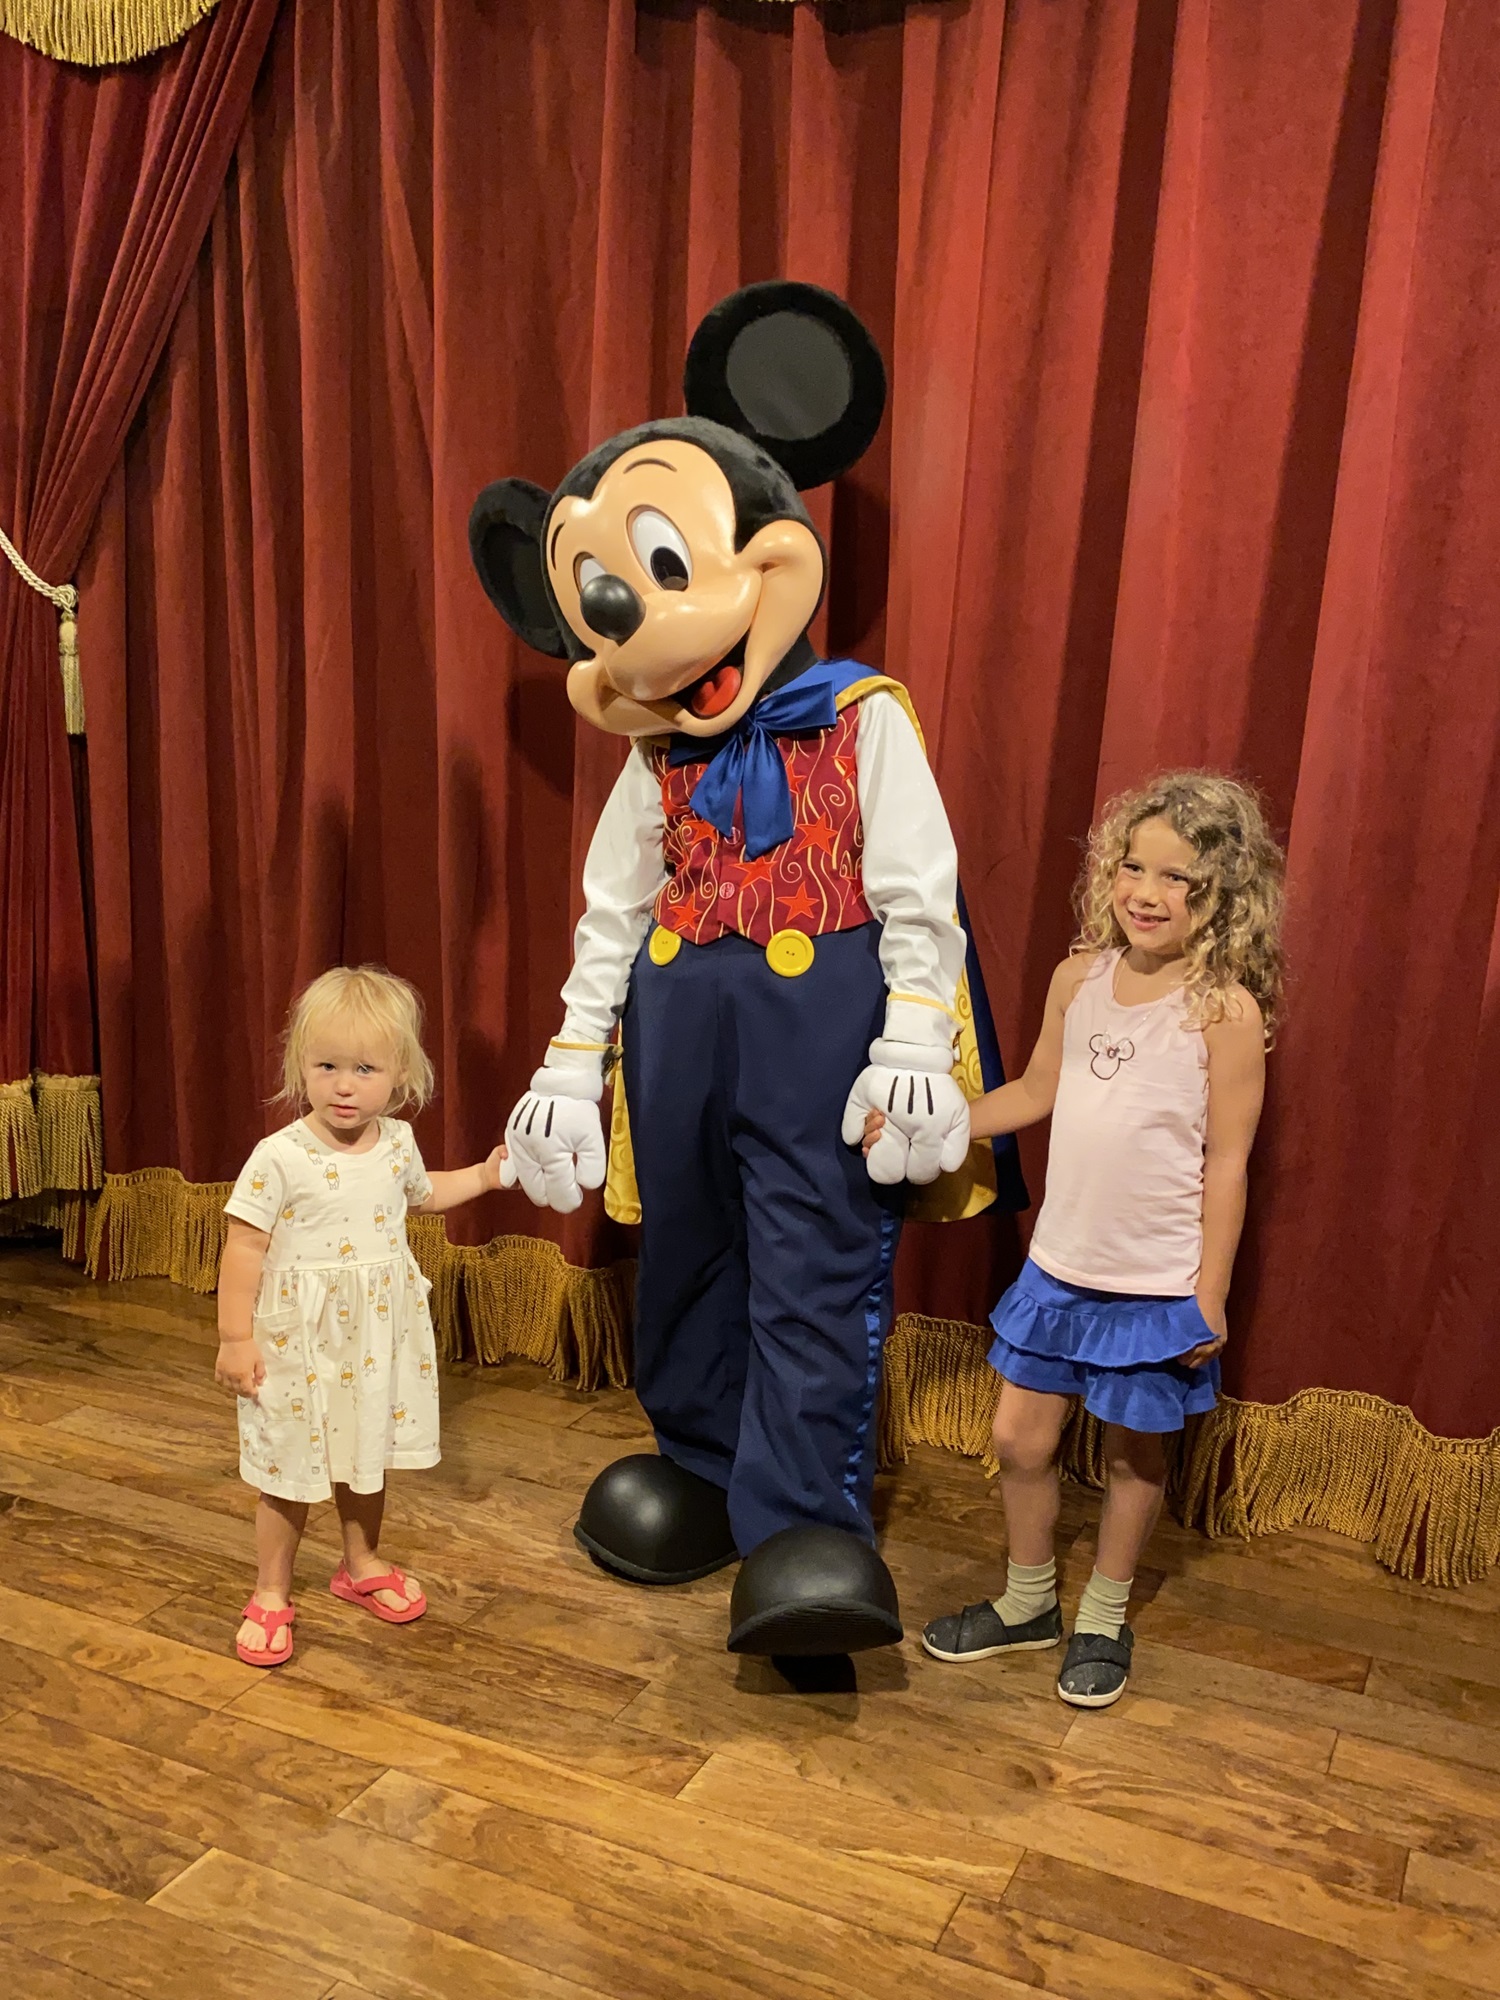 Toddler meeting Mickey in Disney World